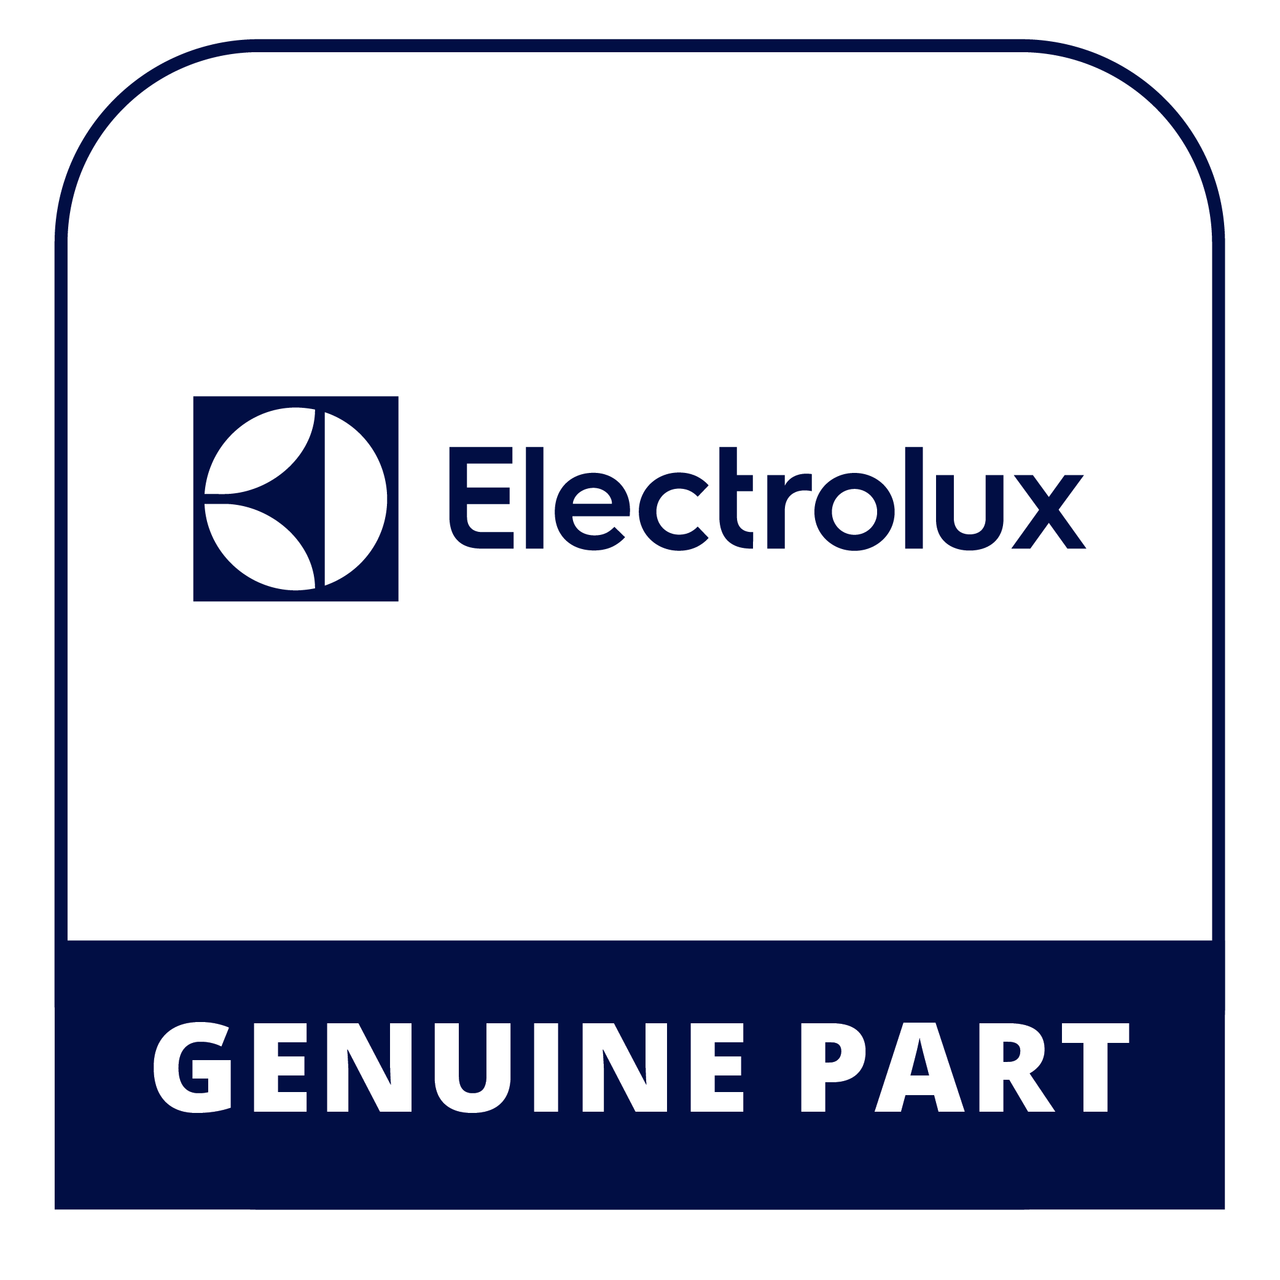 Frigidaire - Electrolux 318291900 Bracket - Genuine Electrolux Part